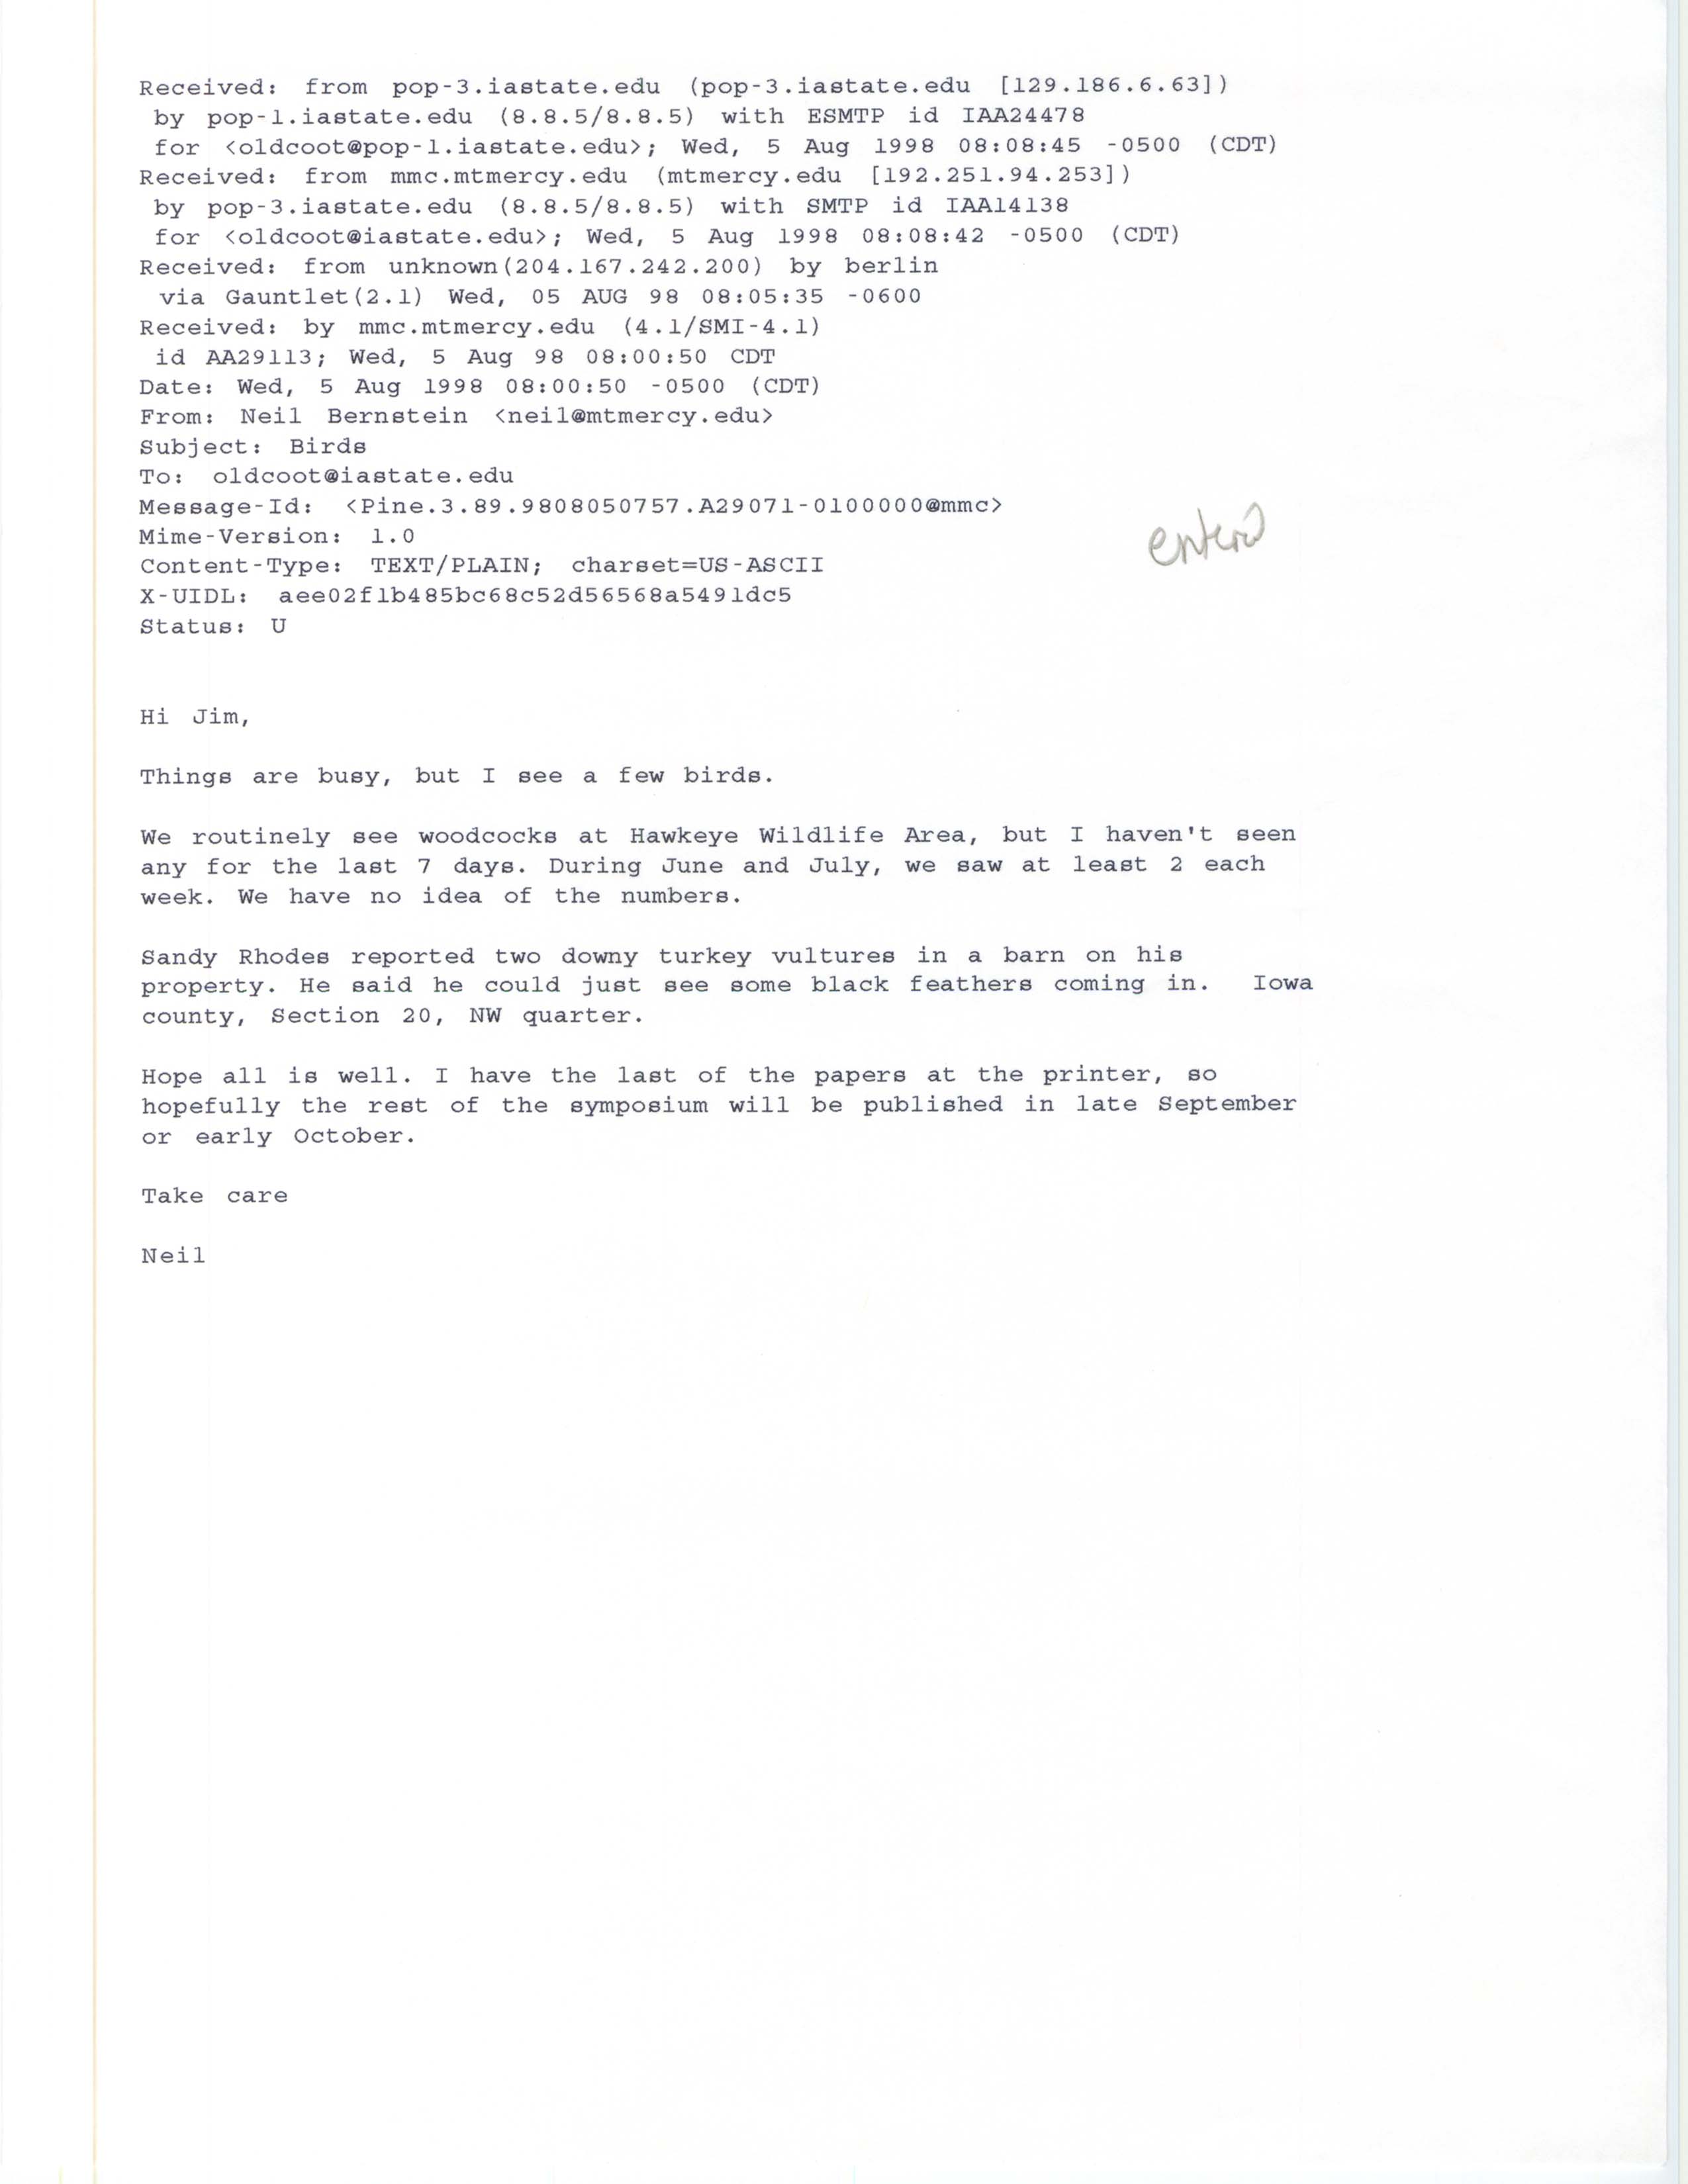 Neil Bernstein email to Jim Dinsmore regarding bird sightings, August 5, 1998